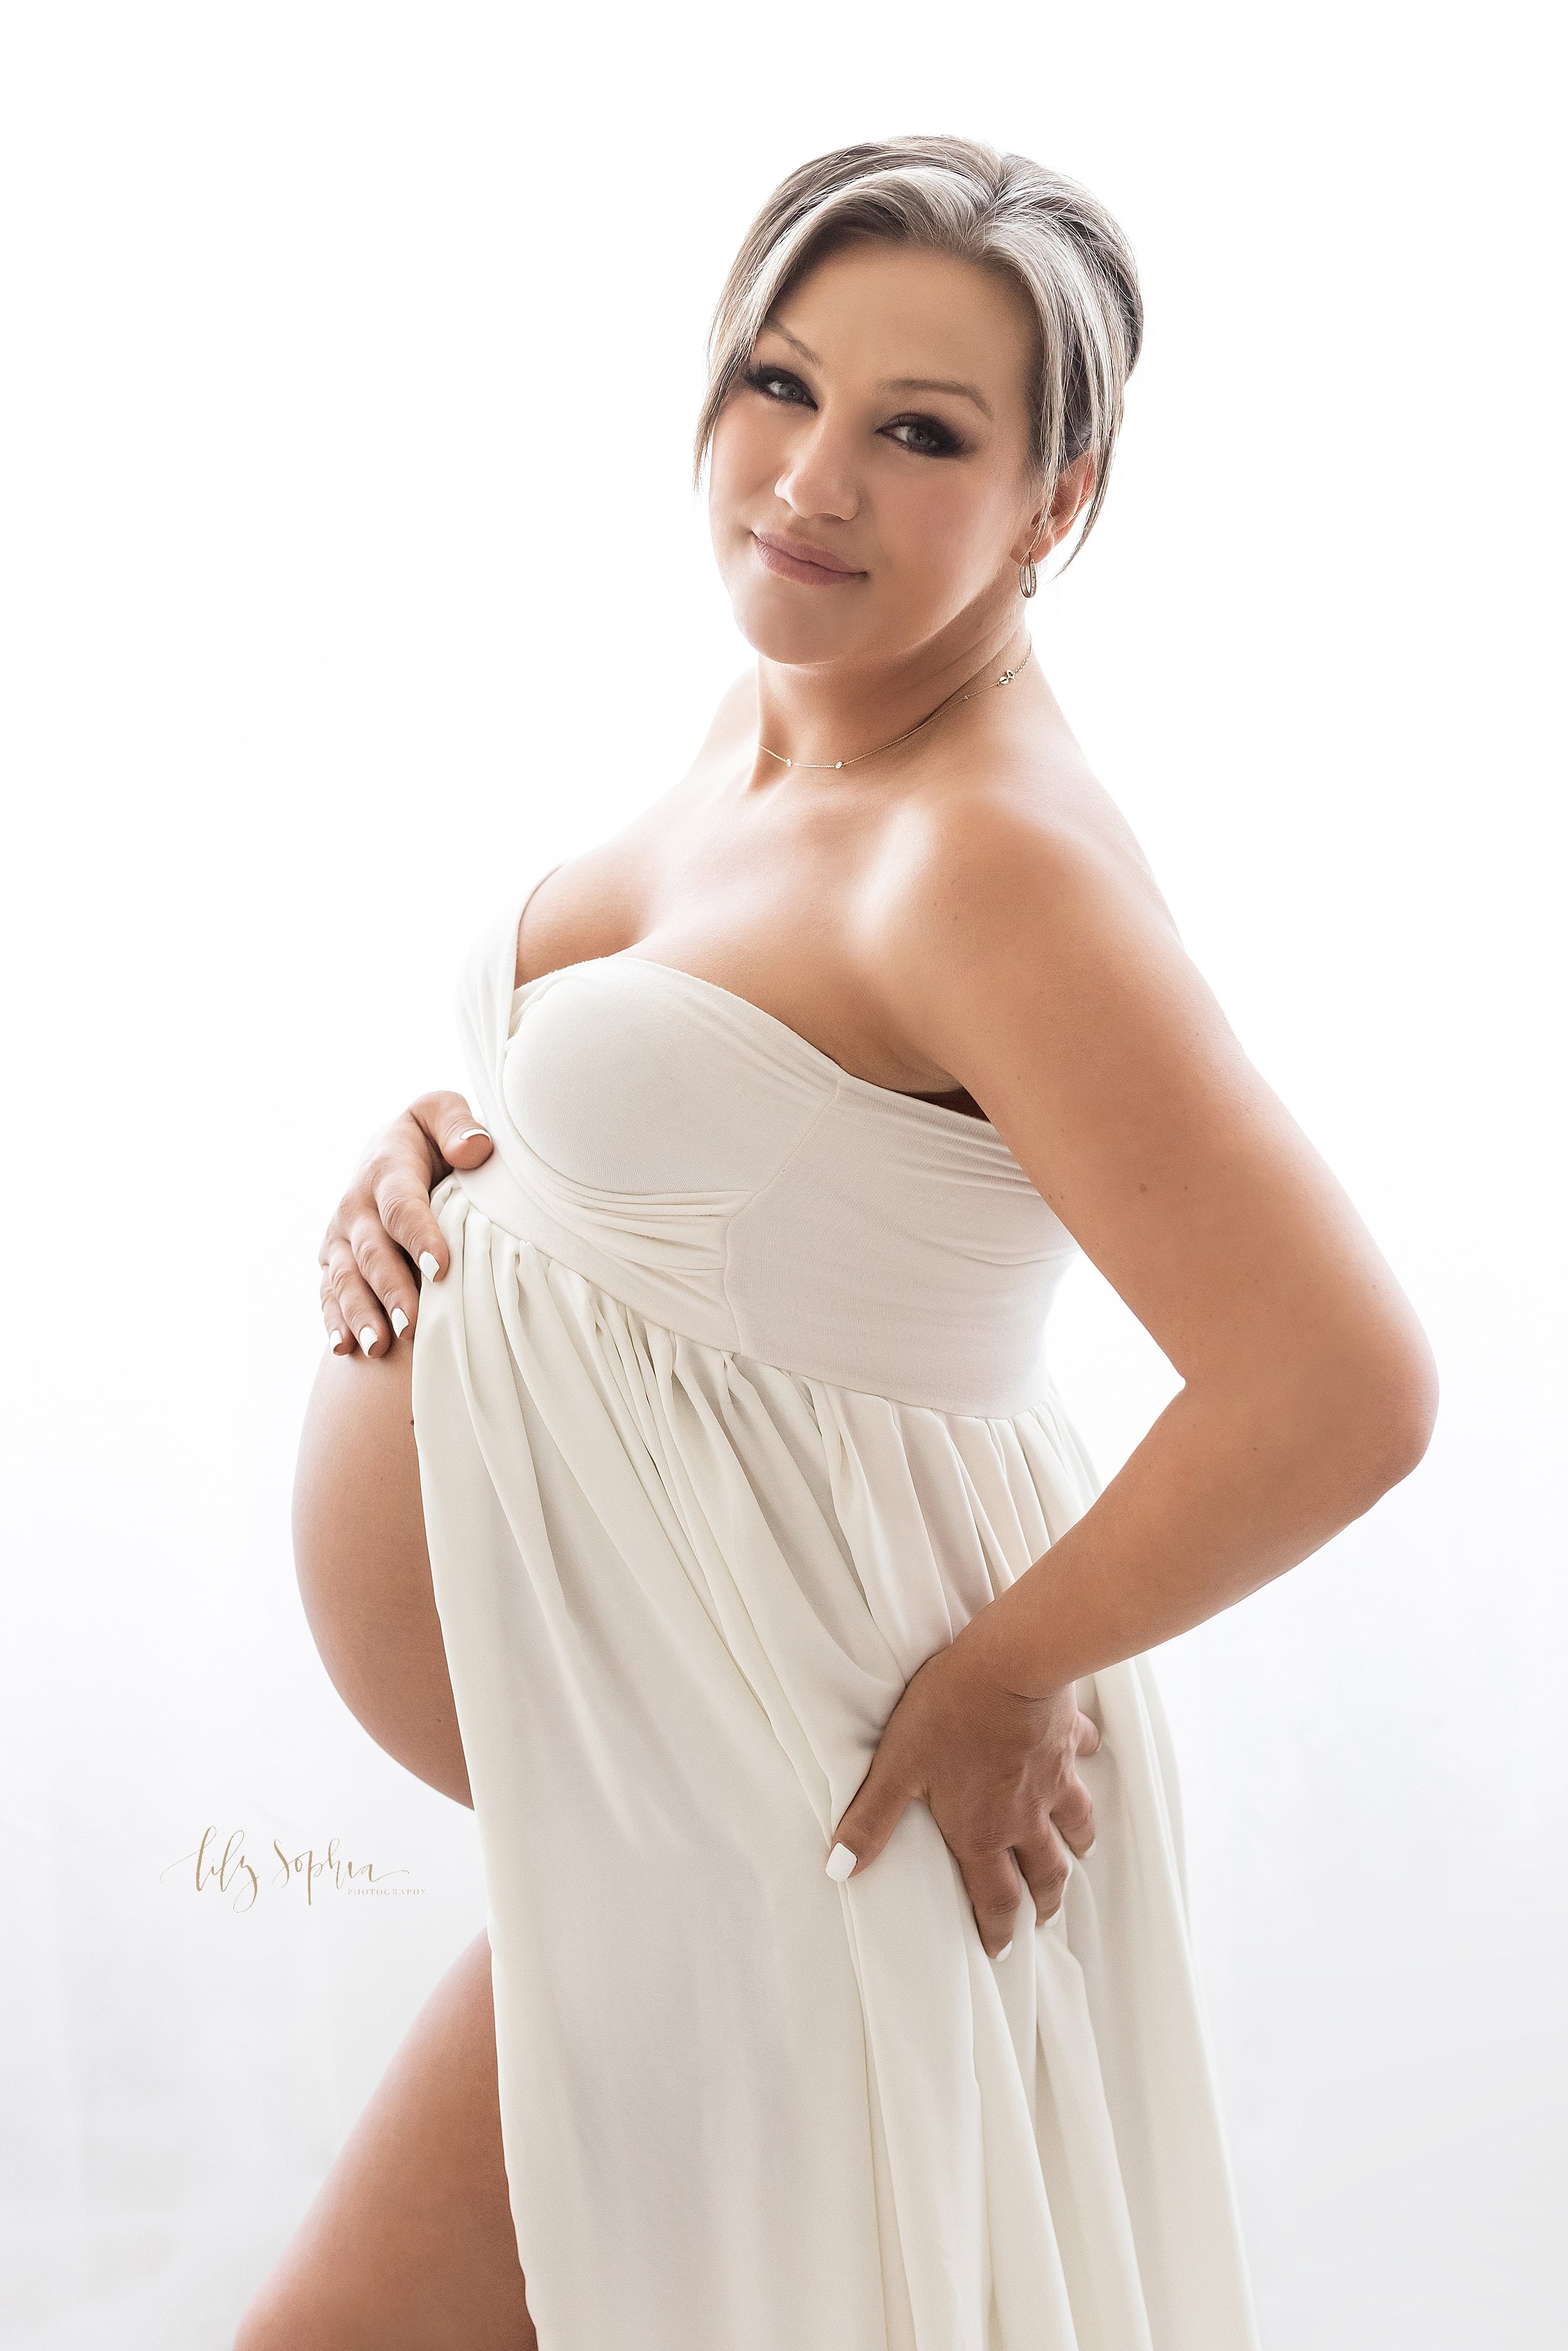 intown-atlanta-grant-park-decatur-kirkwood-ellenwood-maternity-baby-boy-pregnancy-studio-photoshoot_2307.jpg